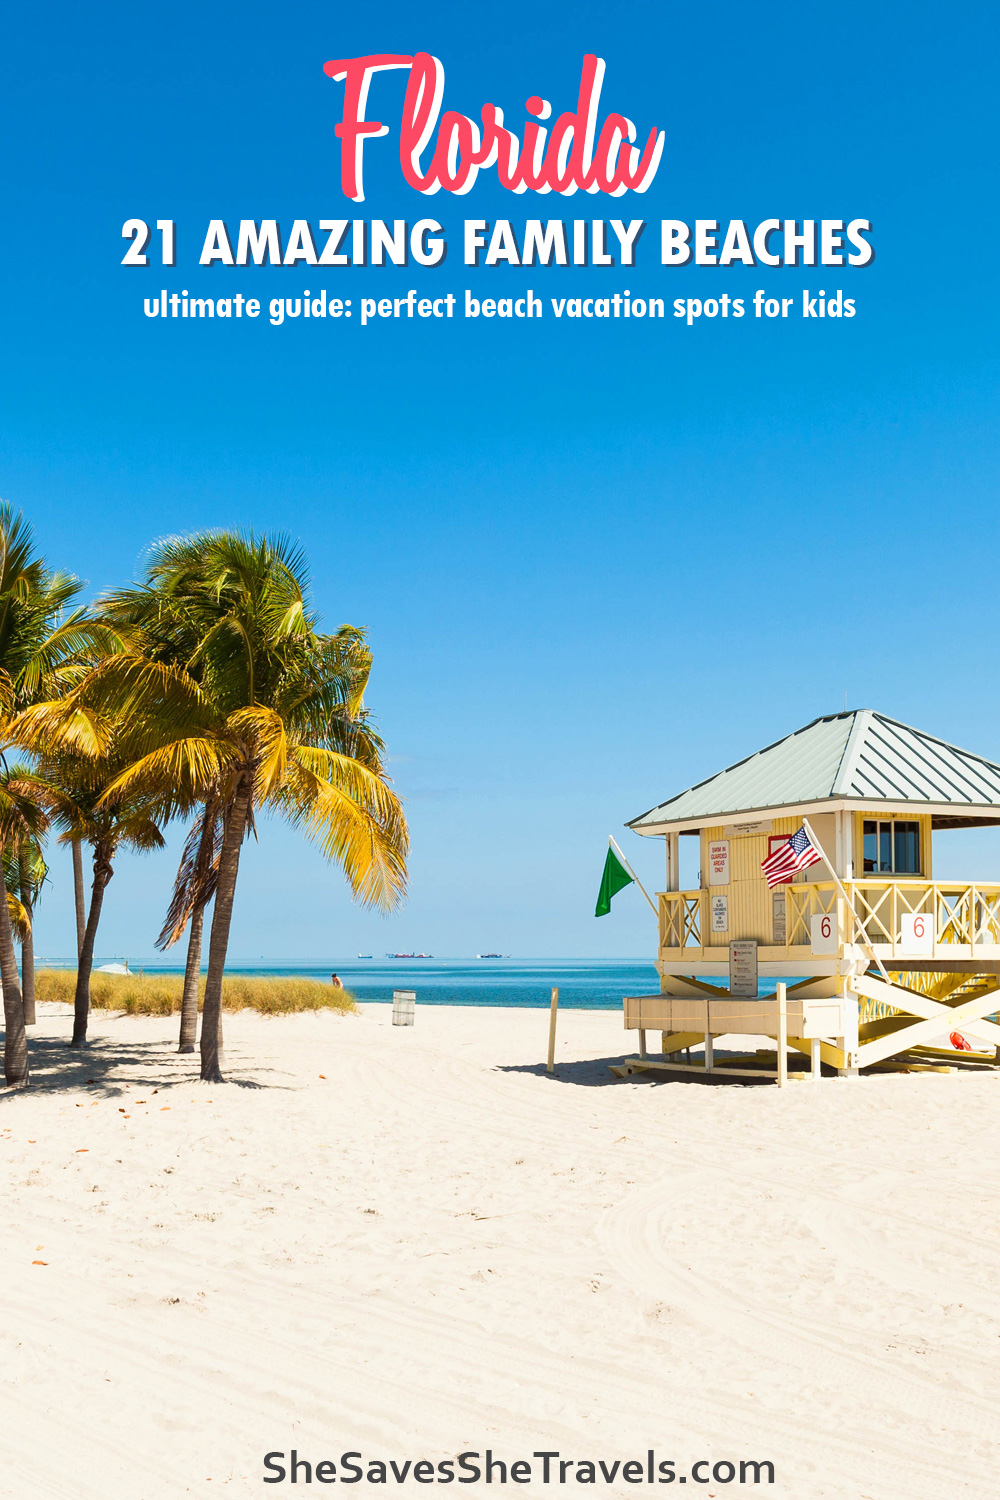 Florida 21 amazing family beaches pic of palm tree lifeguard shack white sand